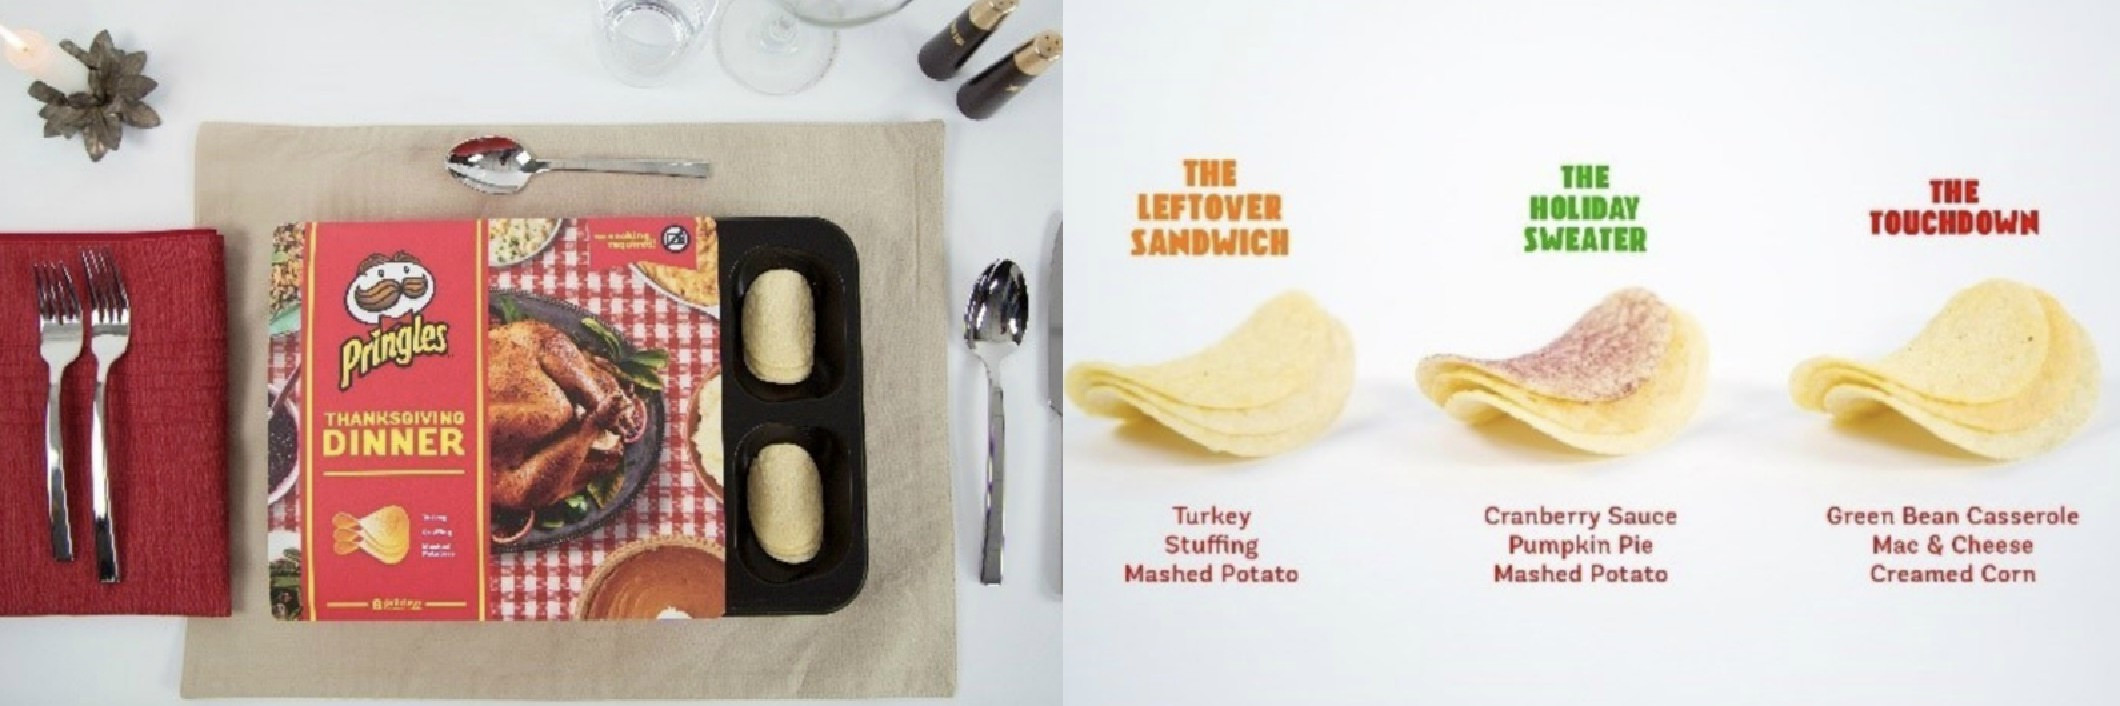 Thanksgiving Dinner Pringles
 Pringles Recreates Thanksgiving Dinner With Eight New Chip